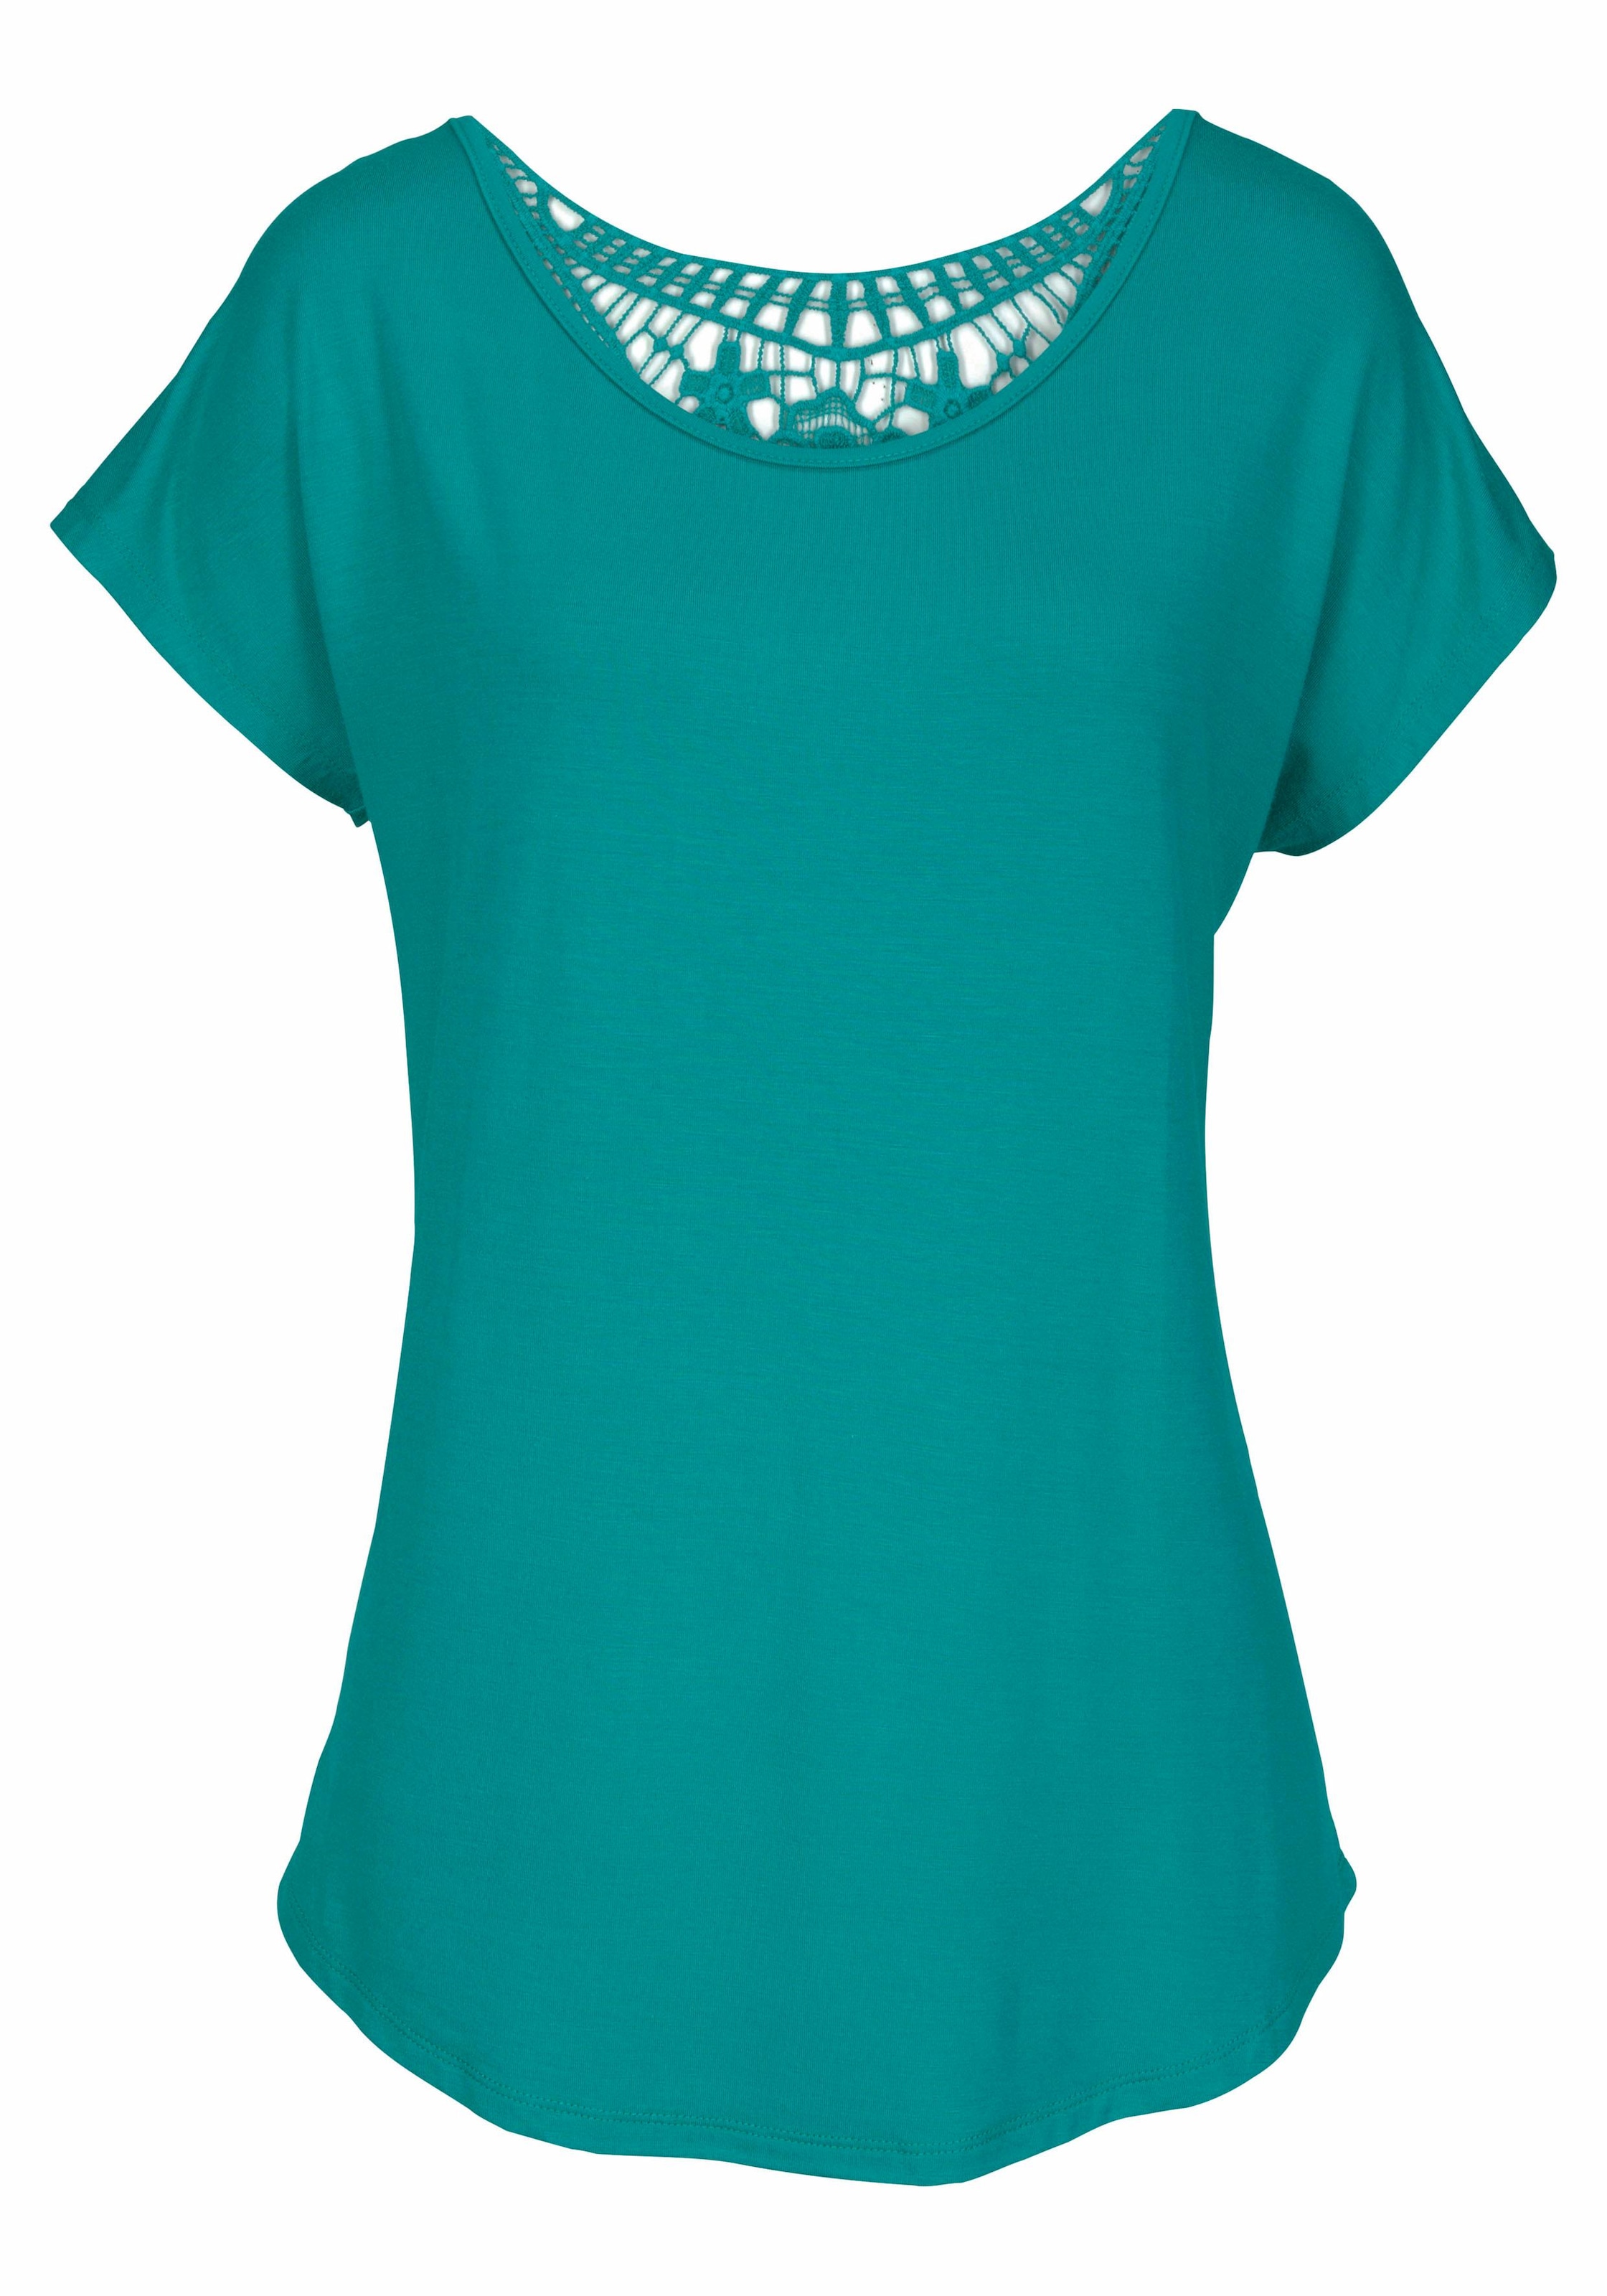 LASCANA Strandshirt, mit Spitzeneinsatz, T-Shirt, lockere Passform, casual-chic